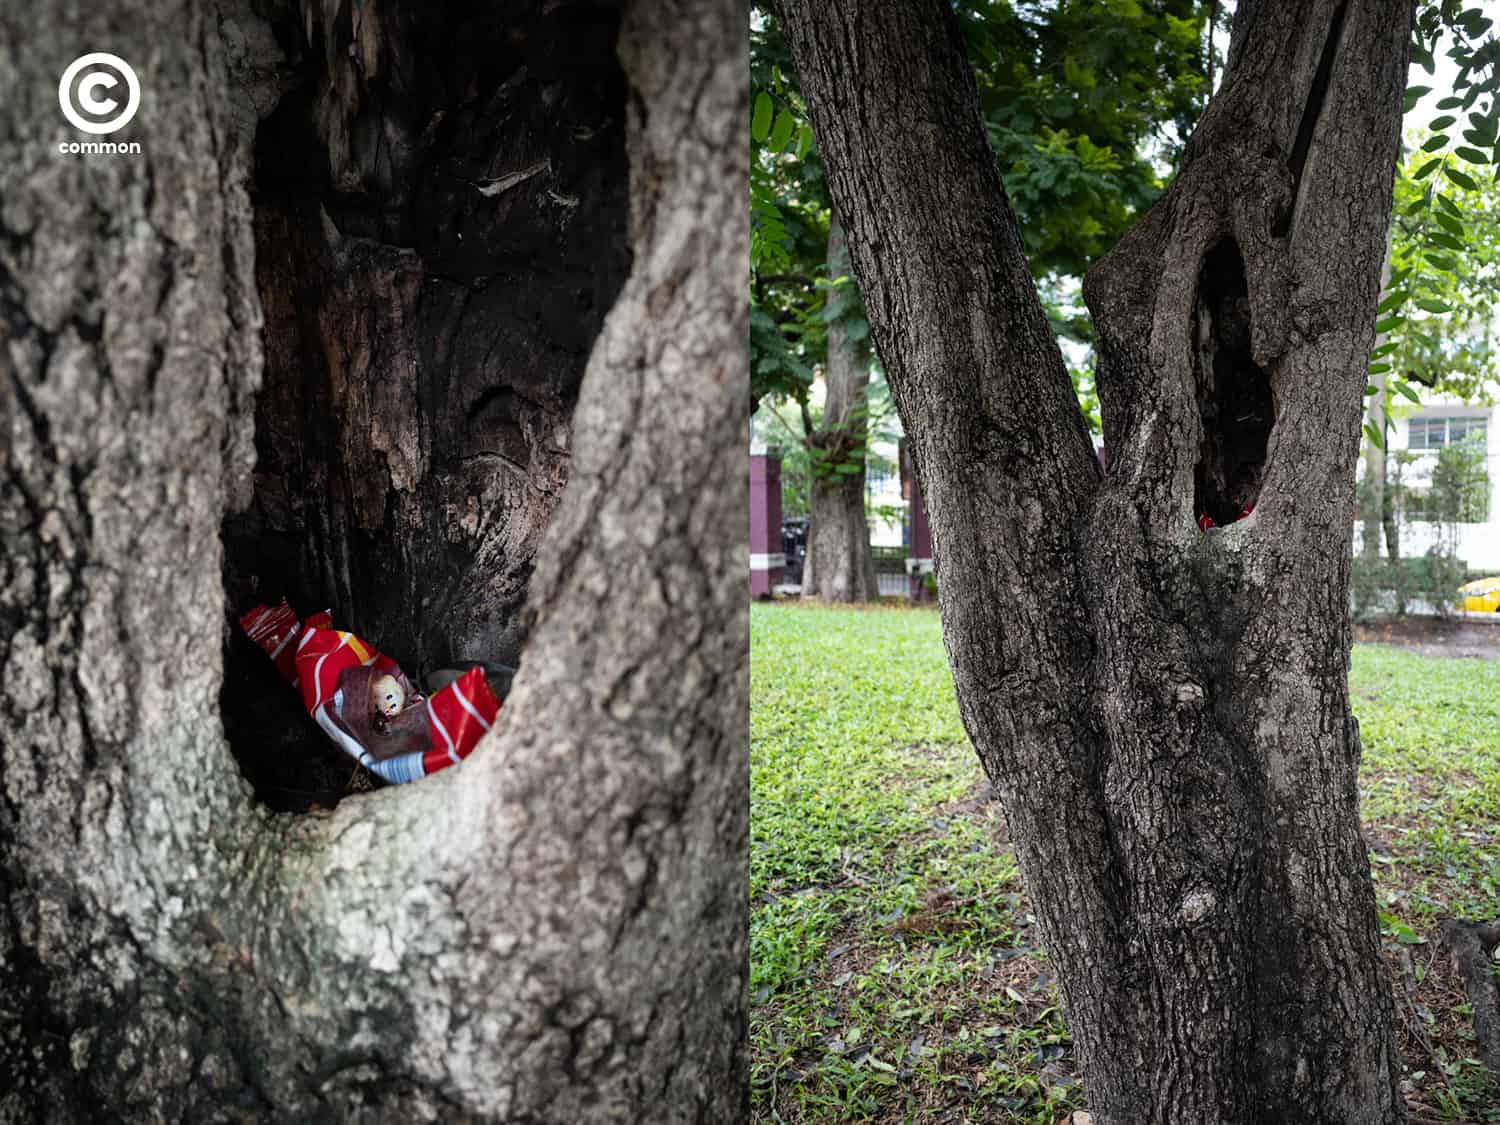 #photo essay #culture #ขยะ #ต้นไม้ #ผิดที่ผิดทาง #ถังขยะ